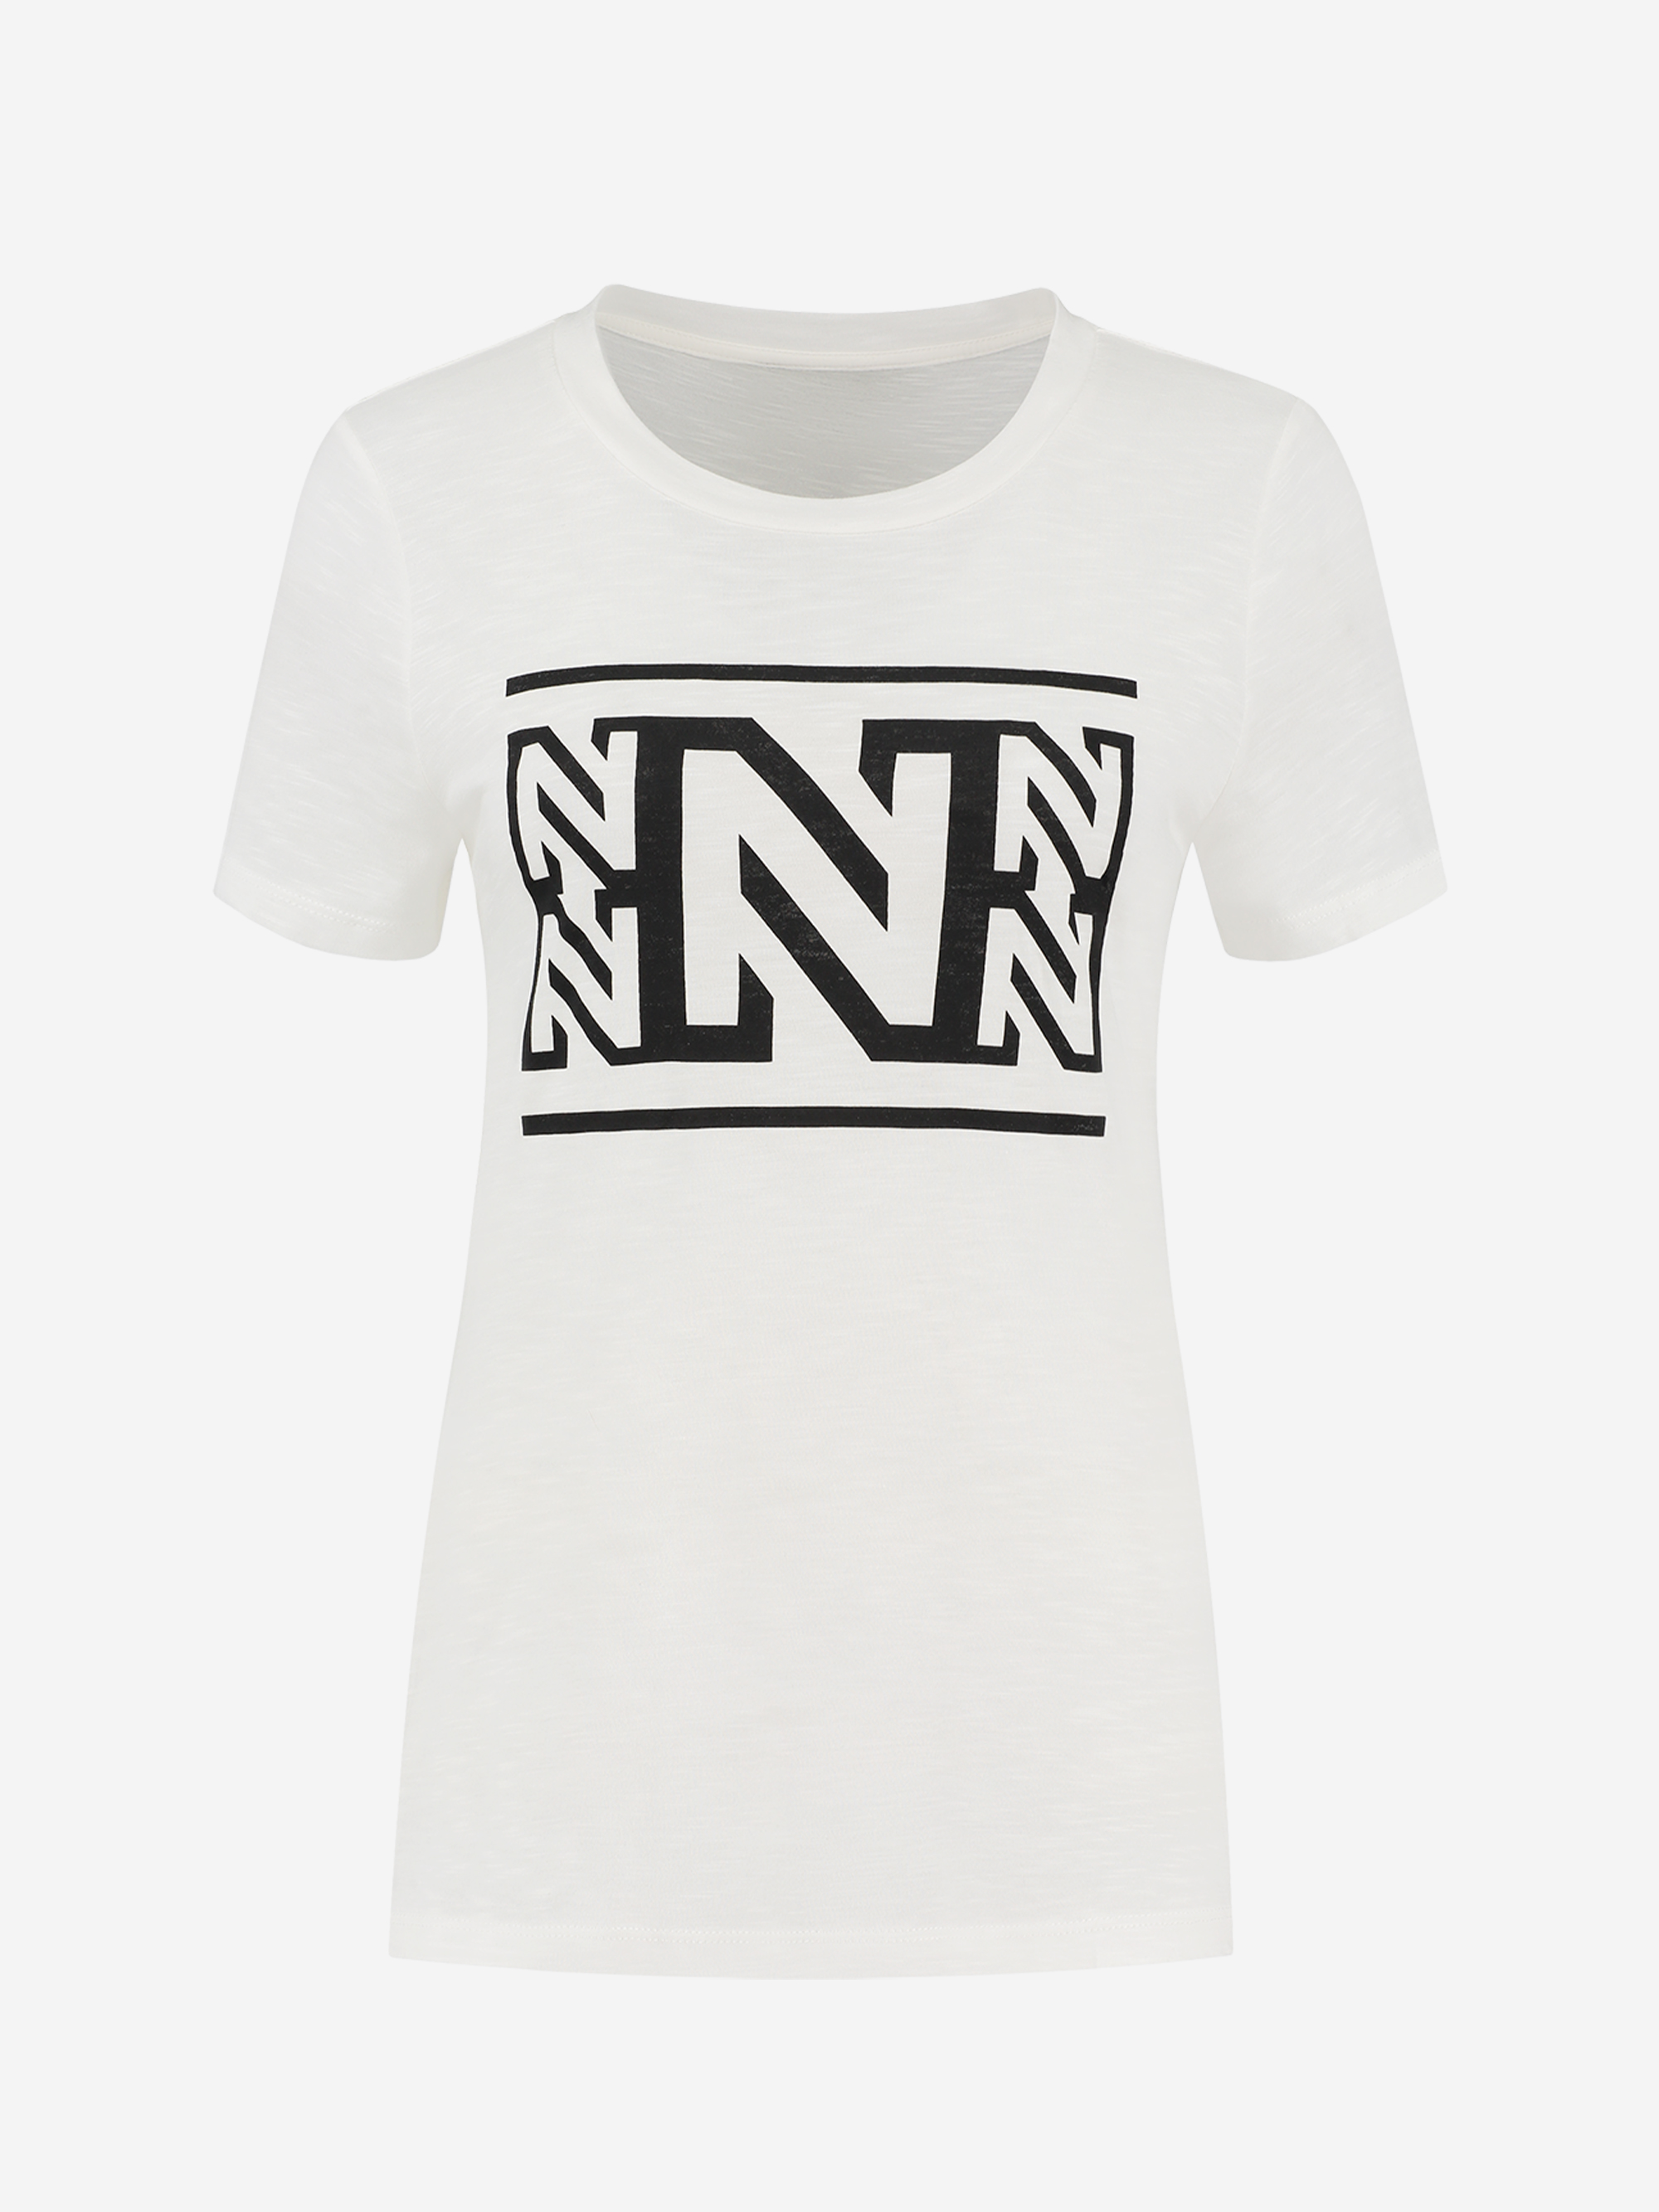 NNN T-shirt